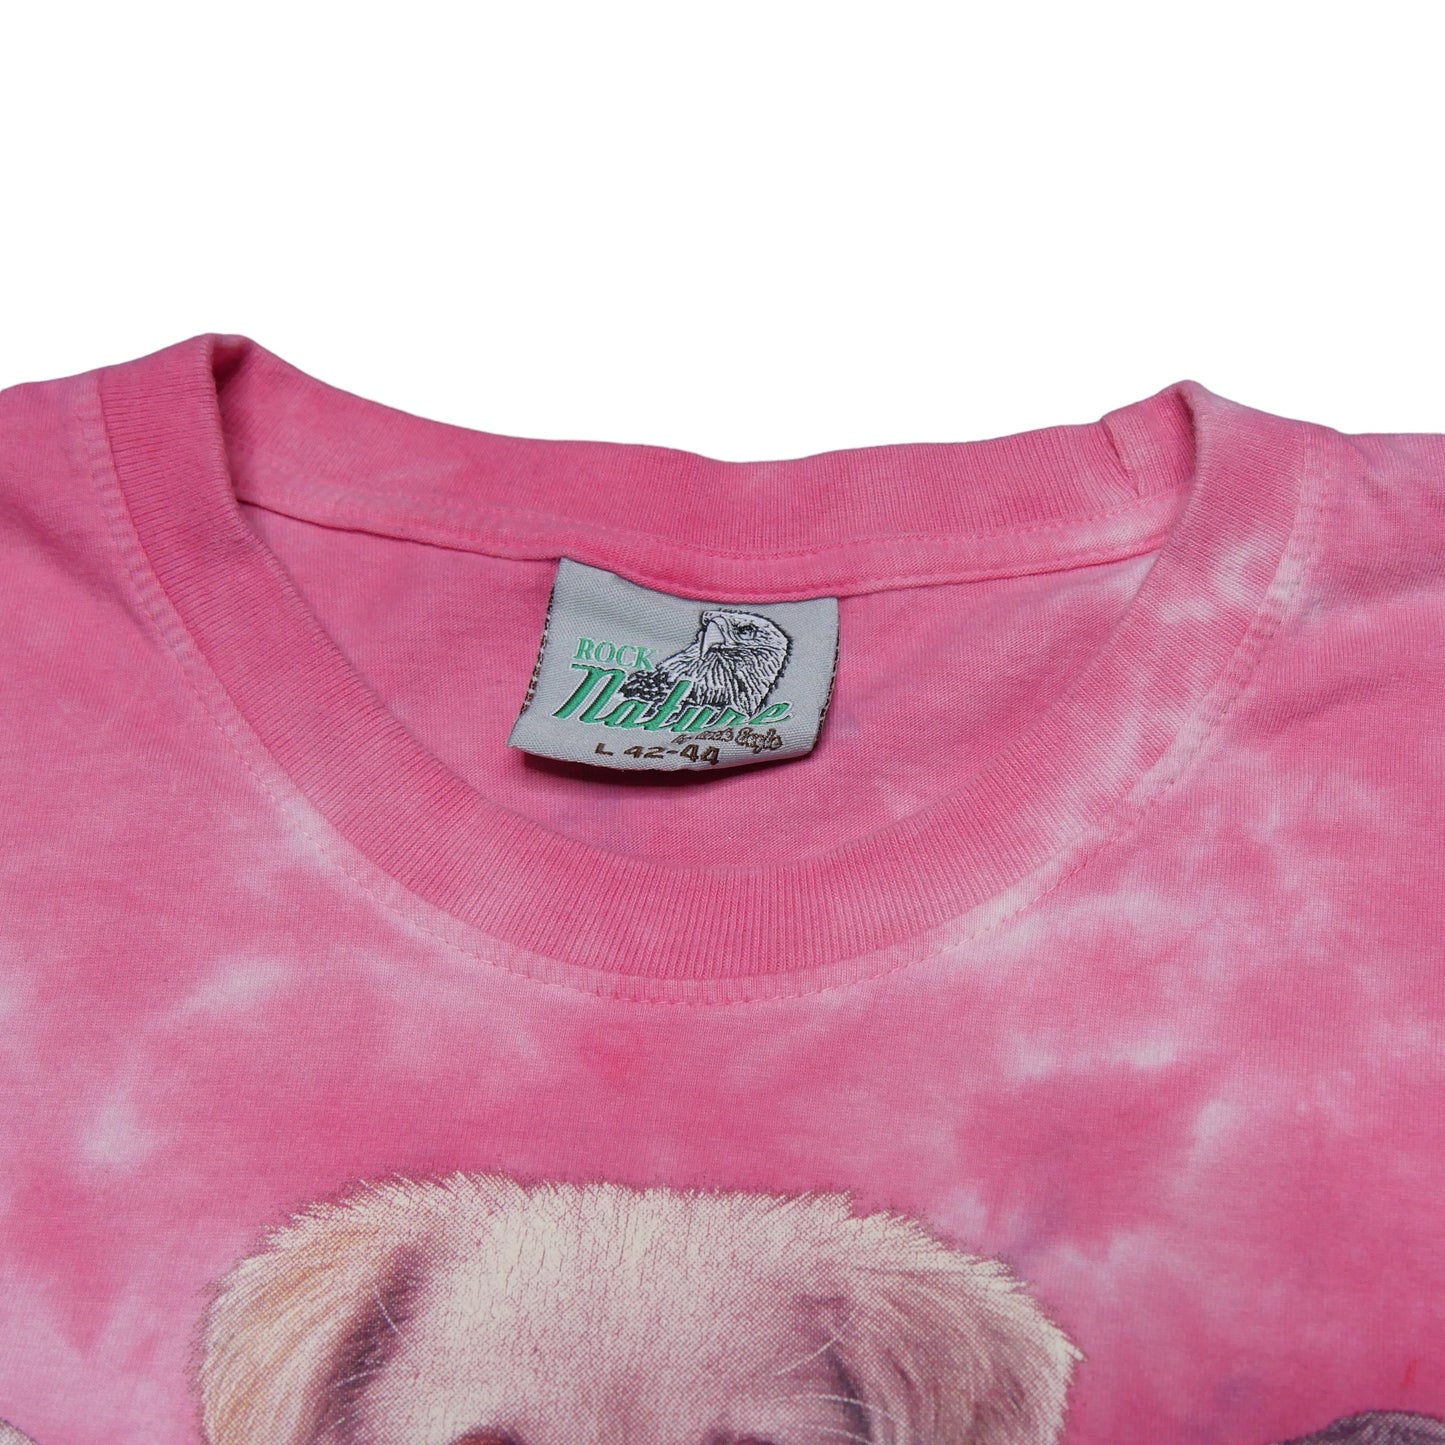 Puppy Dog Tye Dye Shirt - Large